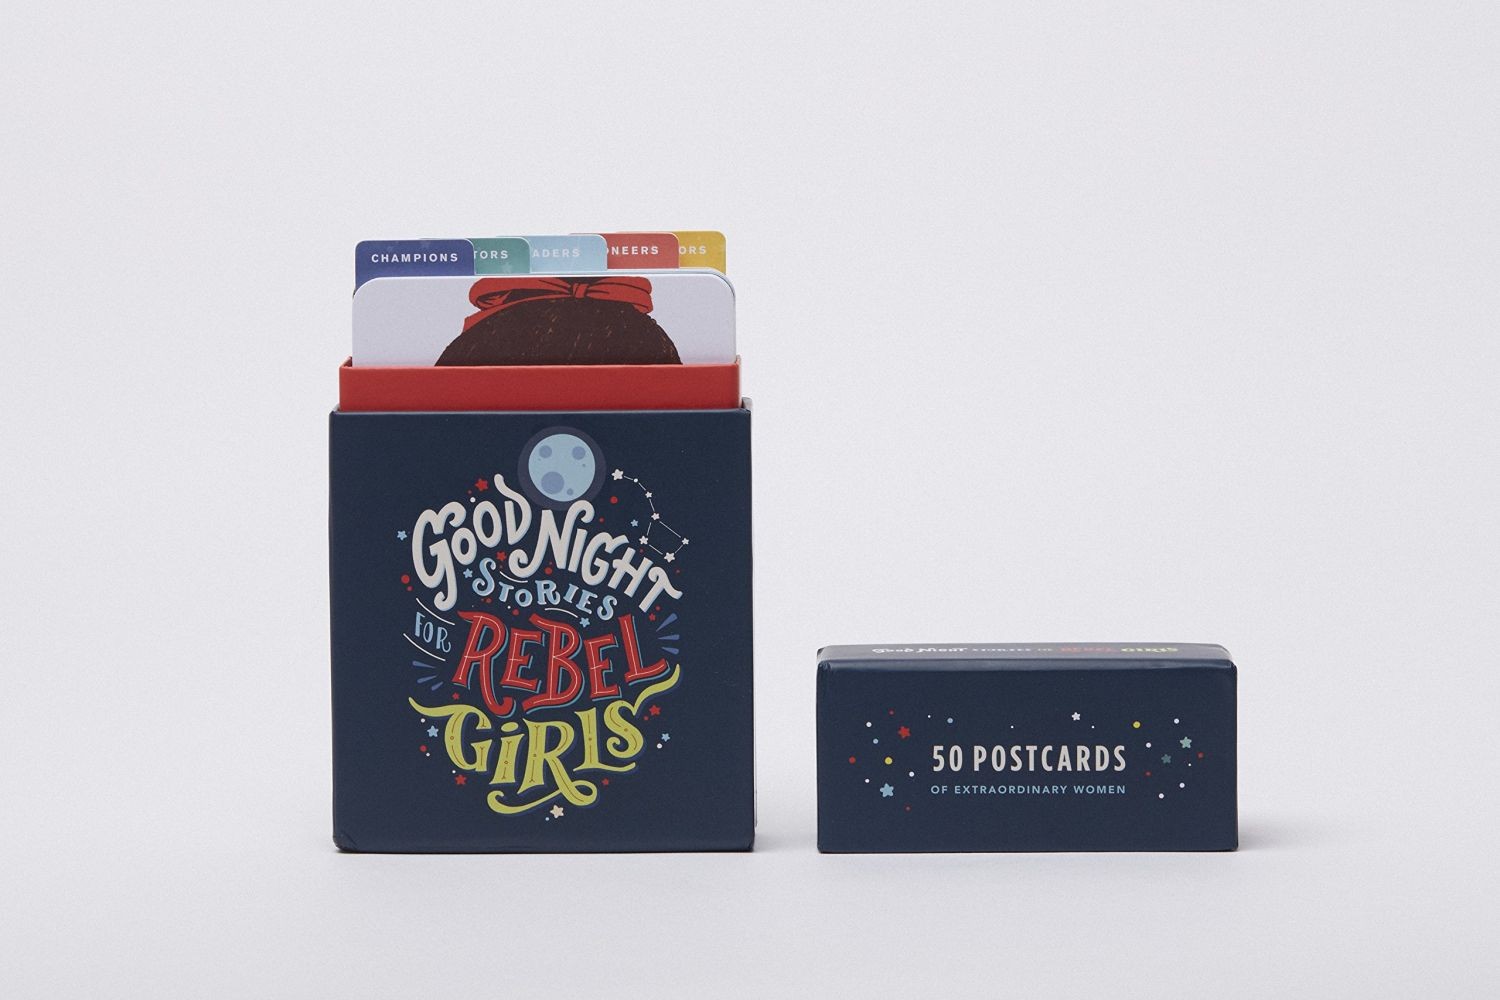 Good Night Stories for Rebel Girls - 50 postcards